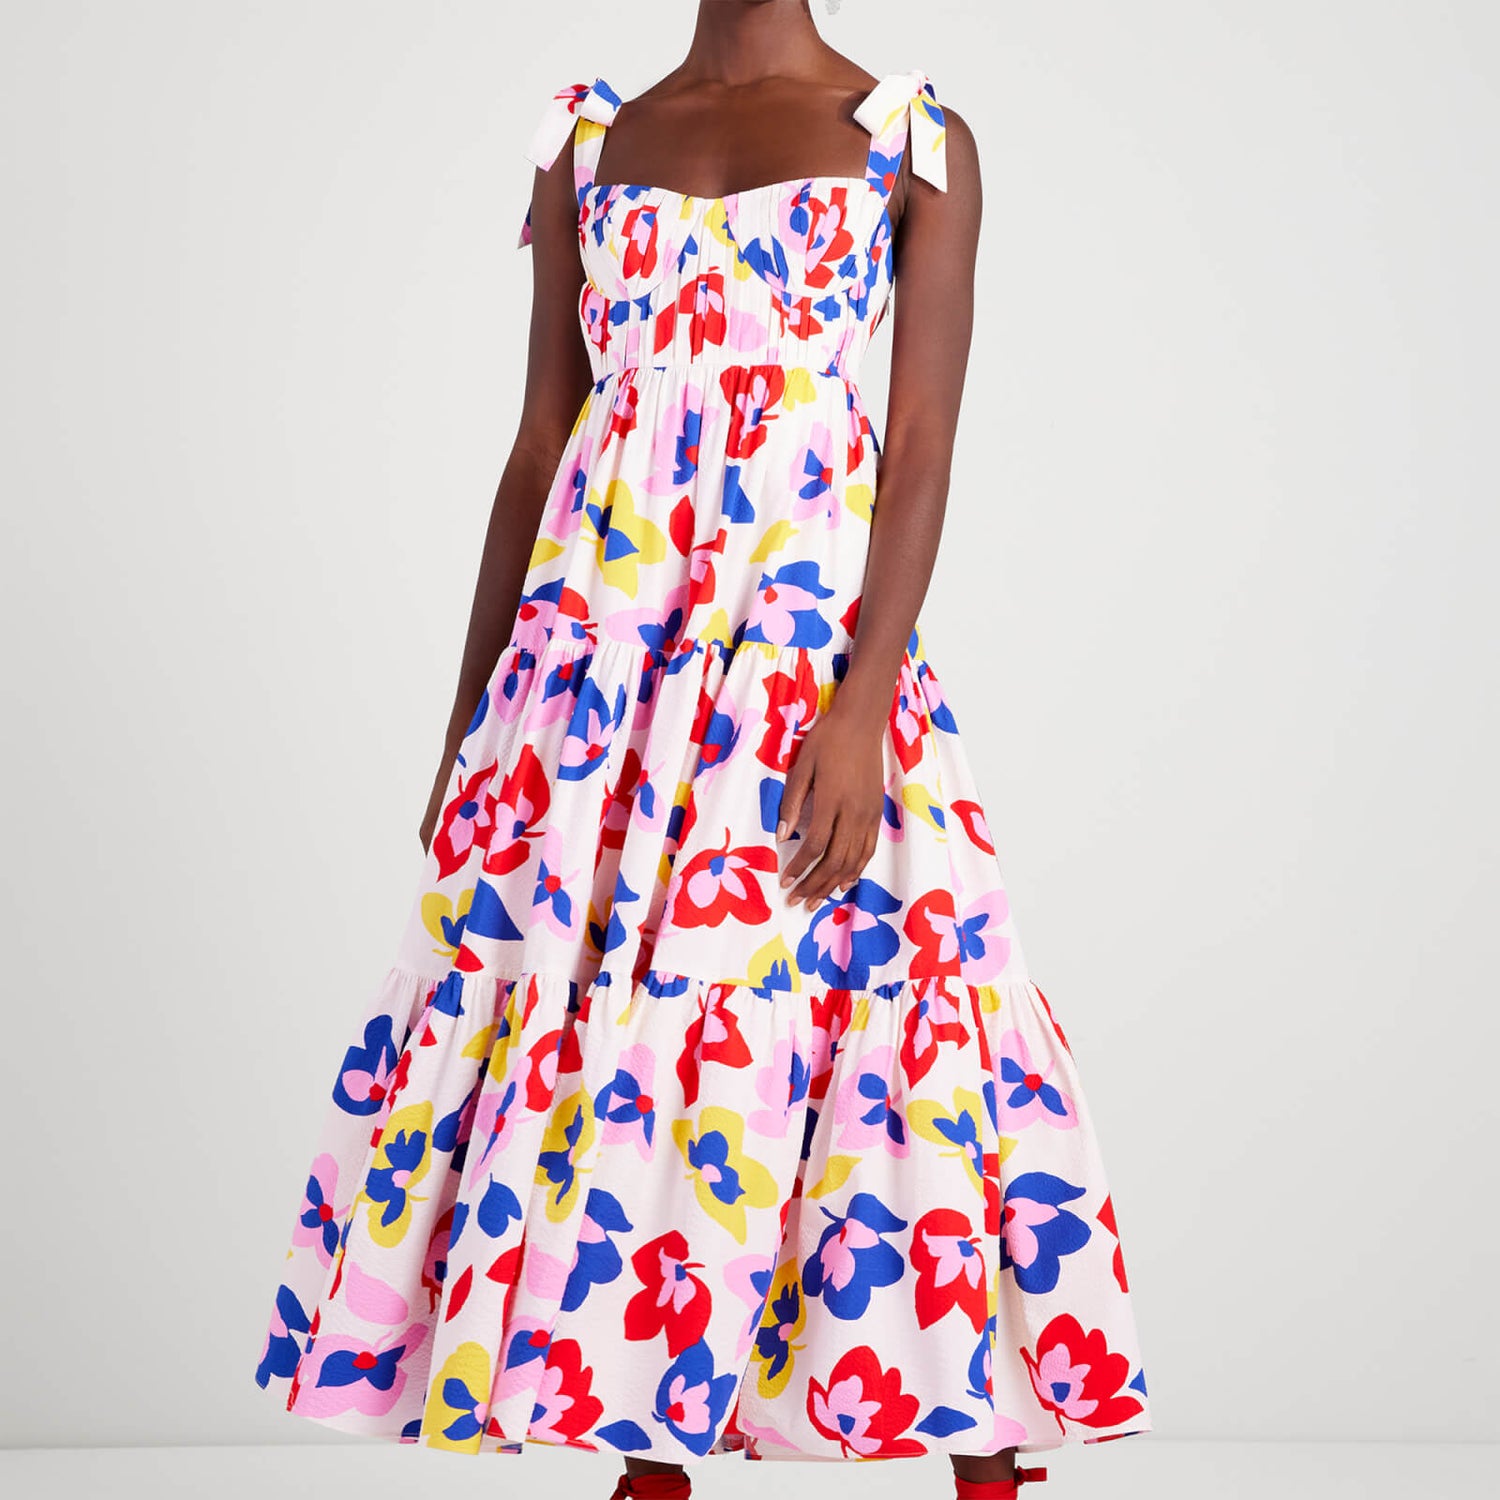 Kate Spade New York Women's Summer Flowers Tiered Dress - Cream Multi - UK 6